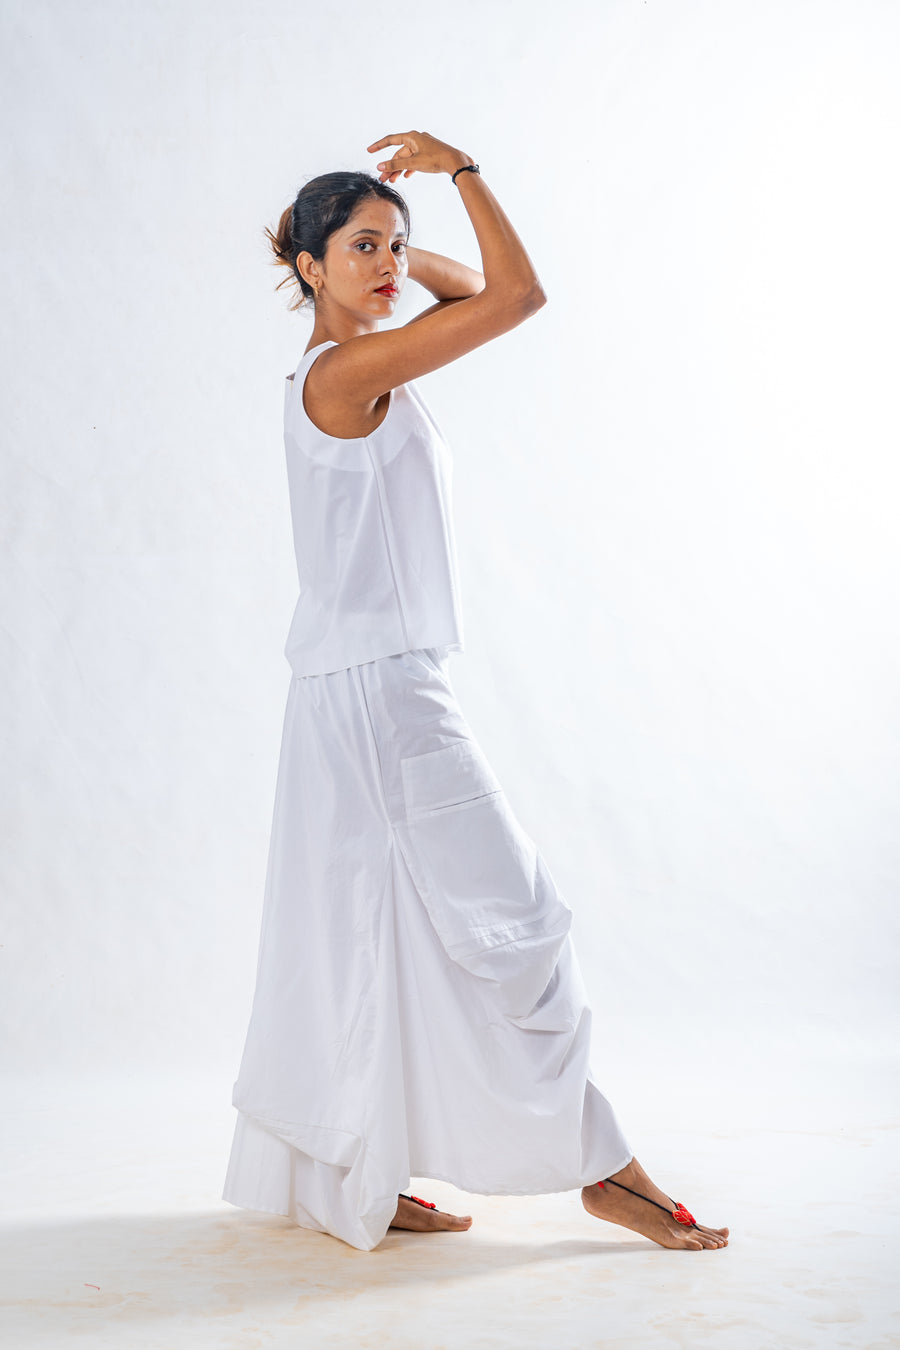 Briset - White cotton Set of Skirt and Top